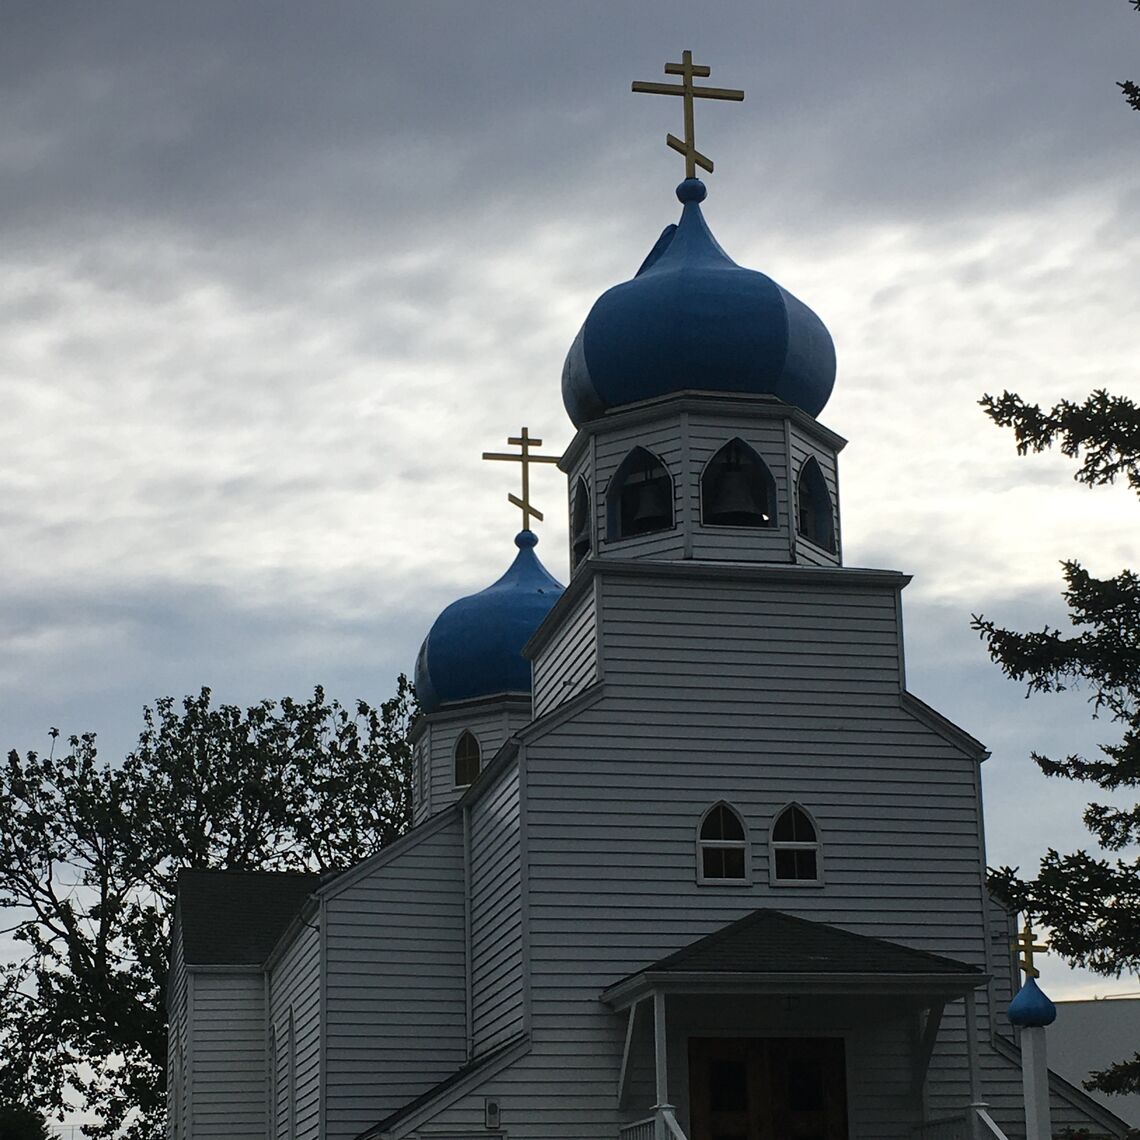 A Russian Orthodox Church building in Kodiak, Alaska.